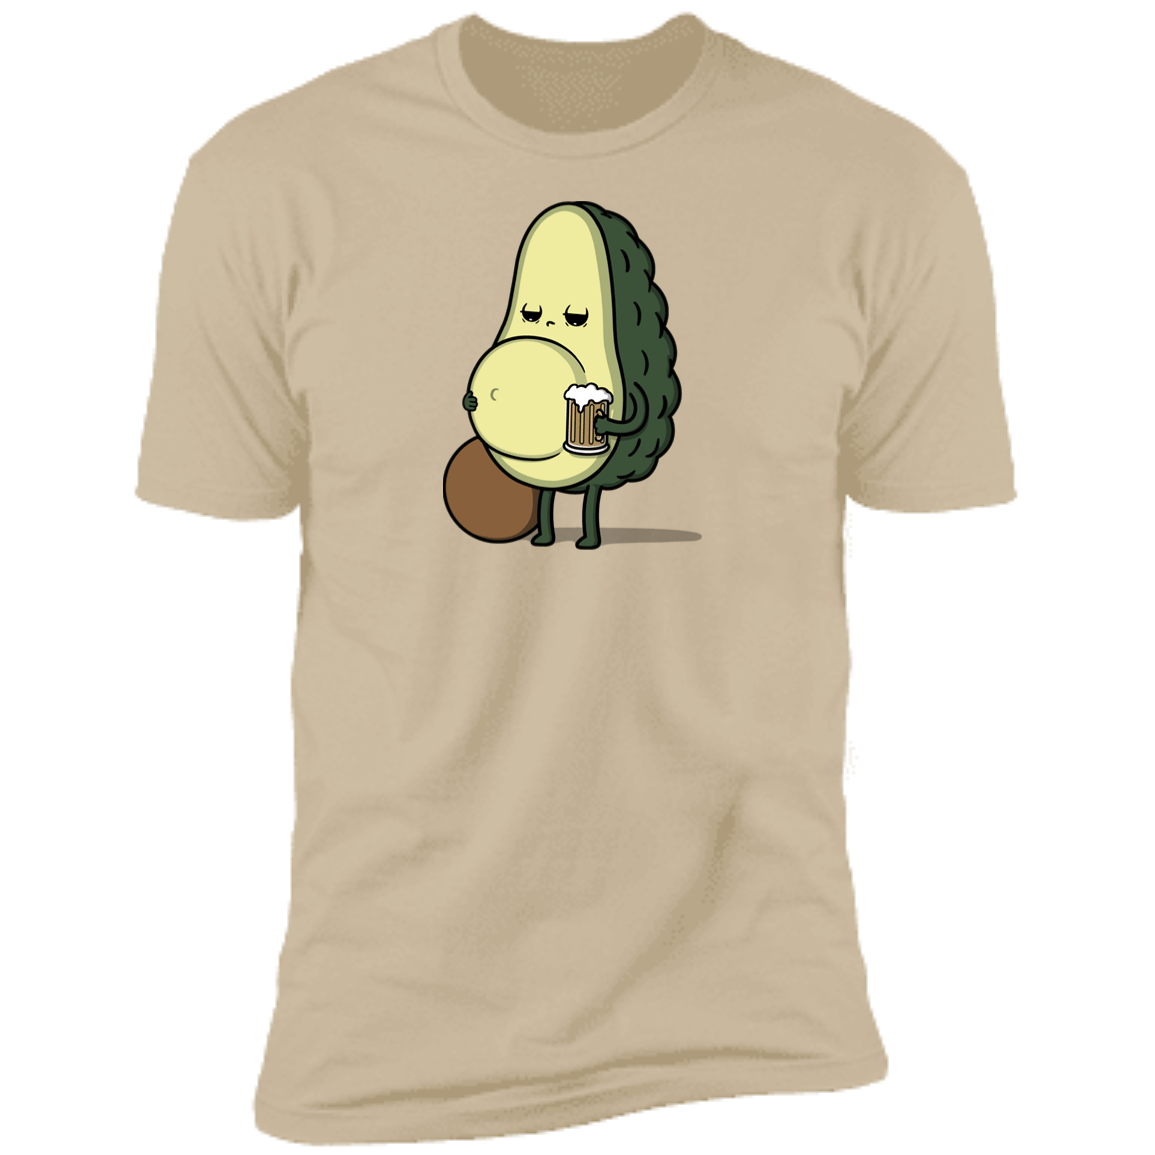 T-Shirts Sand / S Beer Belly Men's Premium T-Shirt